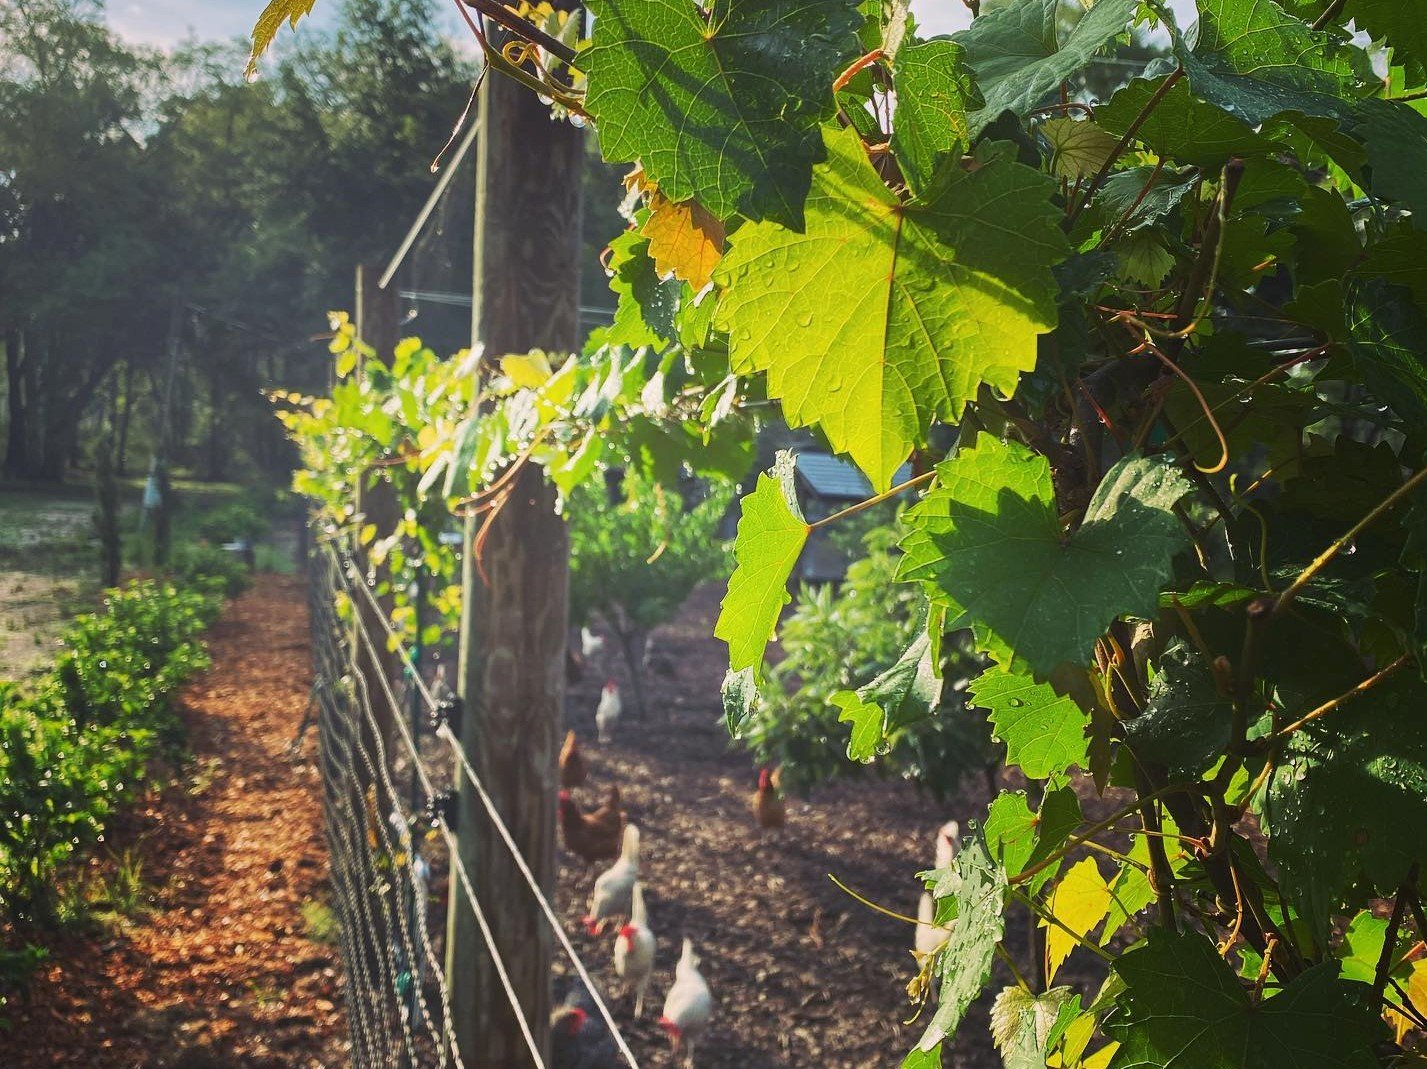 Fox Valley Farm & Hopyard's grape vines and chickens